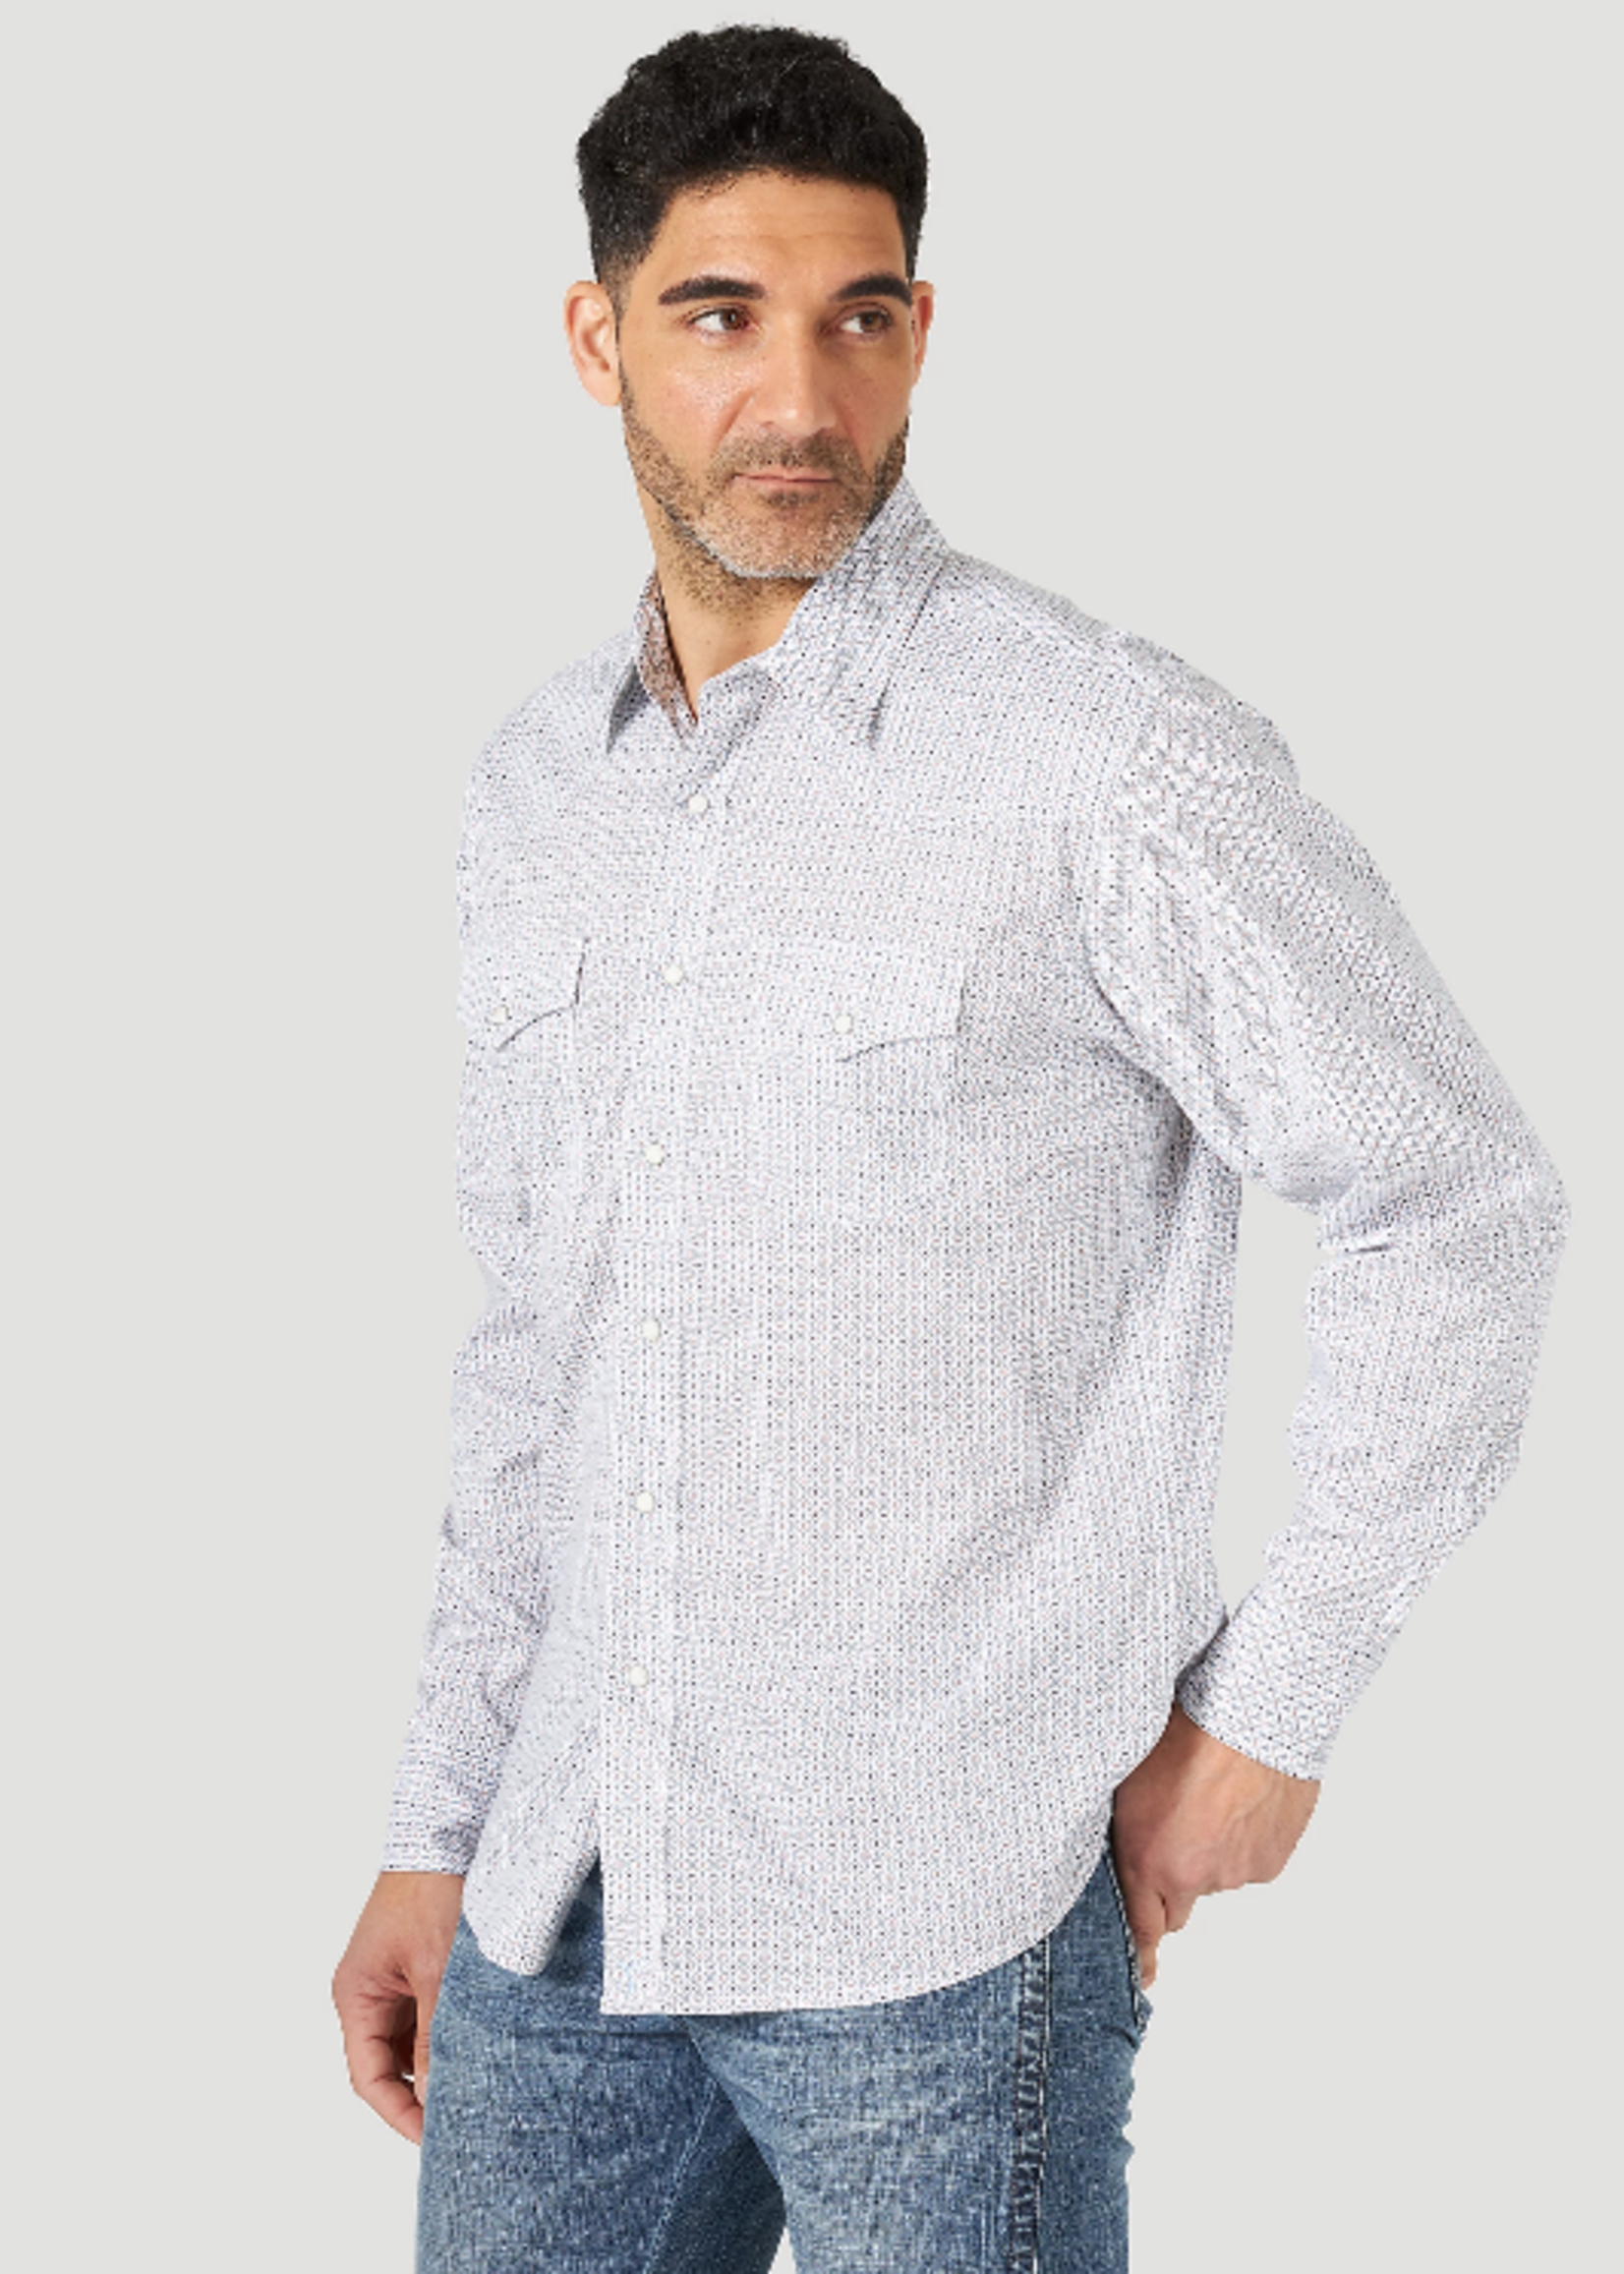 Wrangler Wrangler - Men's 20X Competition Advanced Comfort Long Sleeve Plaid Shirt - MJC349M